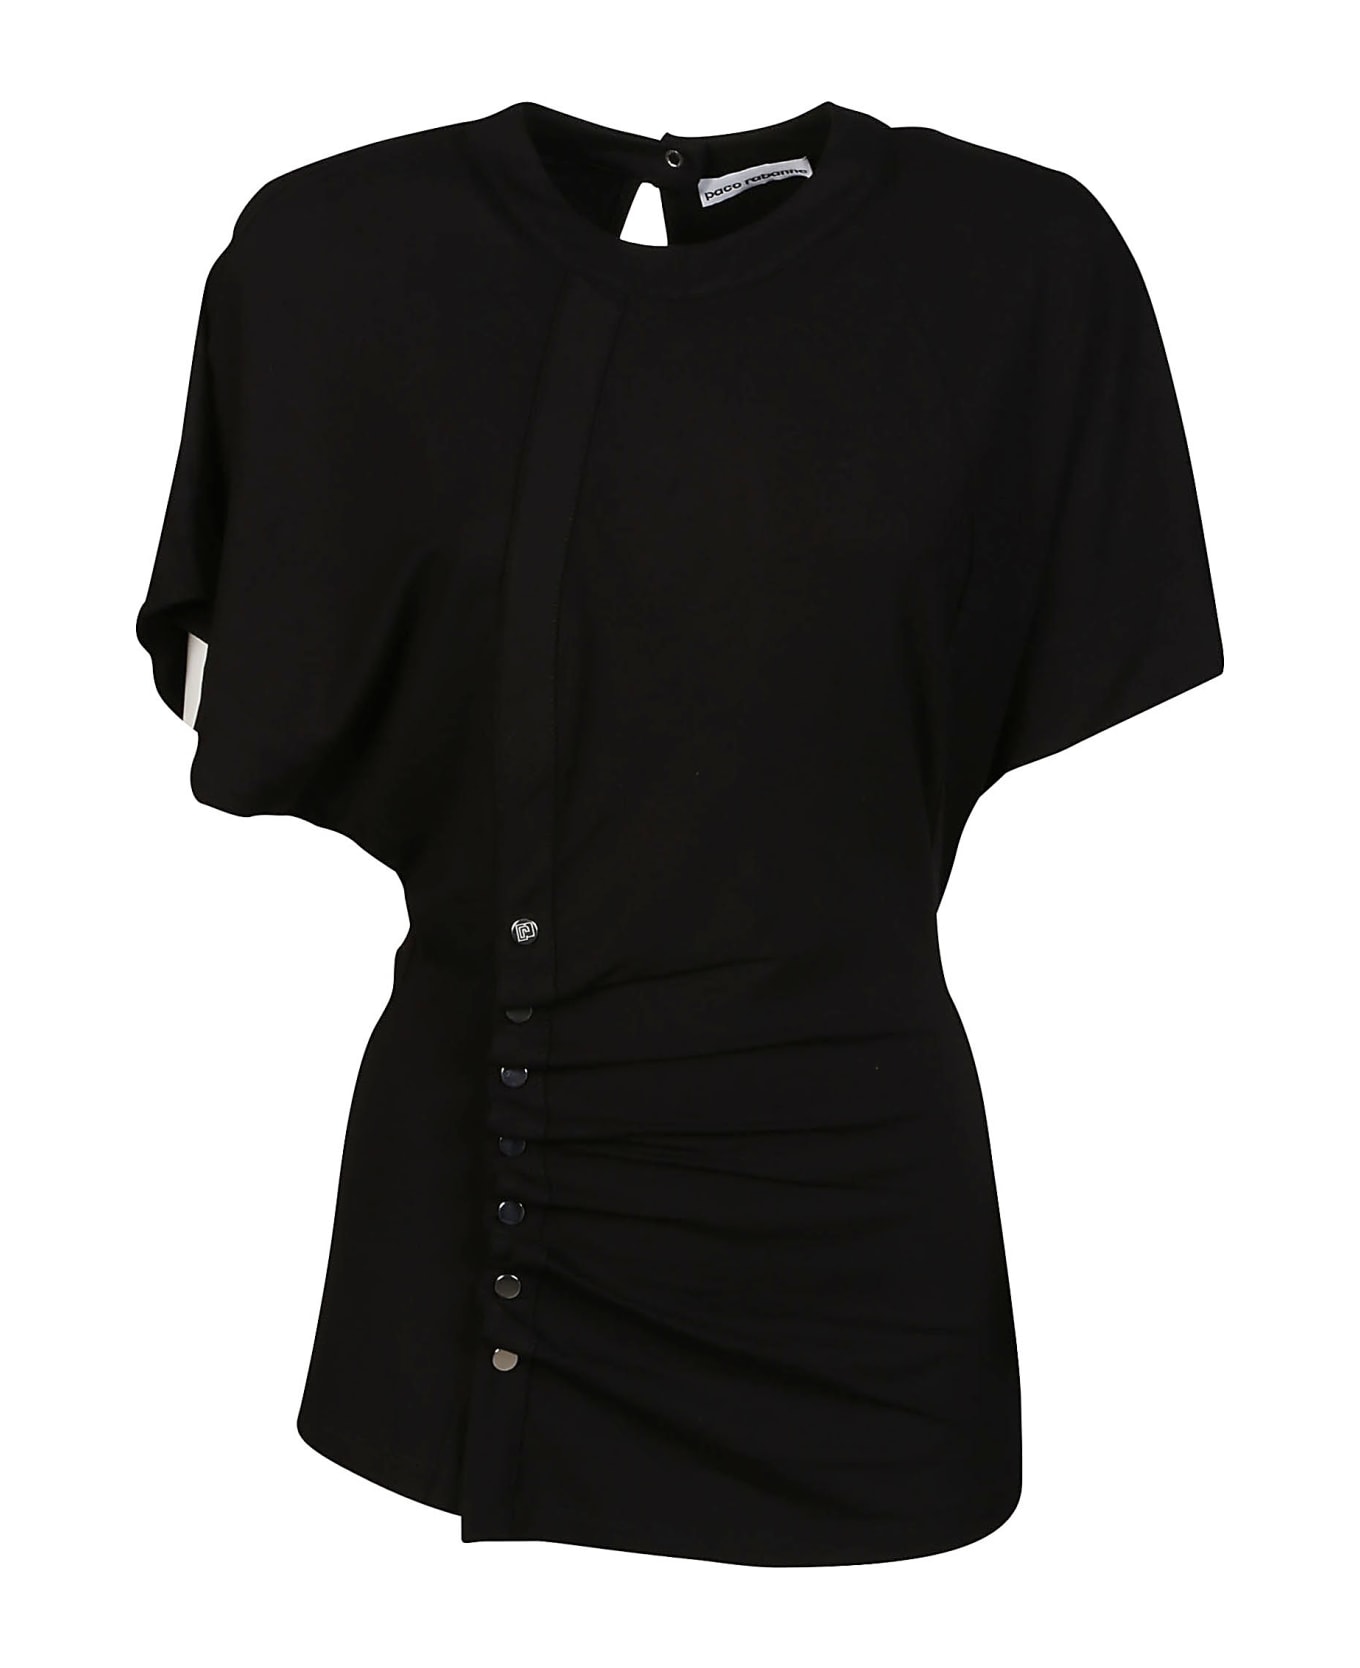 Paco Rabanne Short Sleeve Top - Black Tシャツ